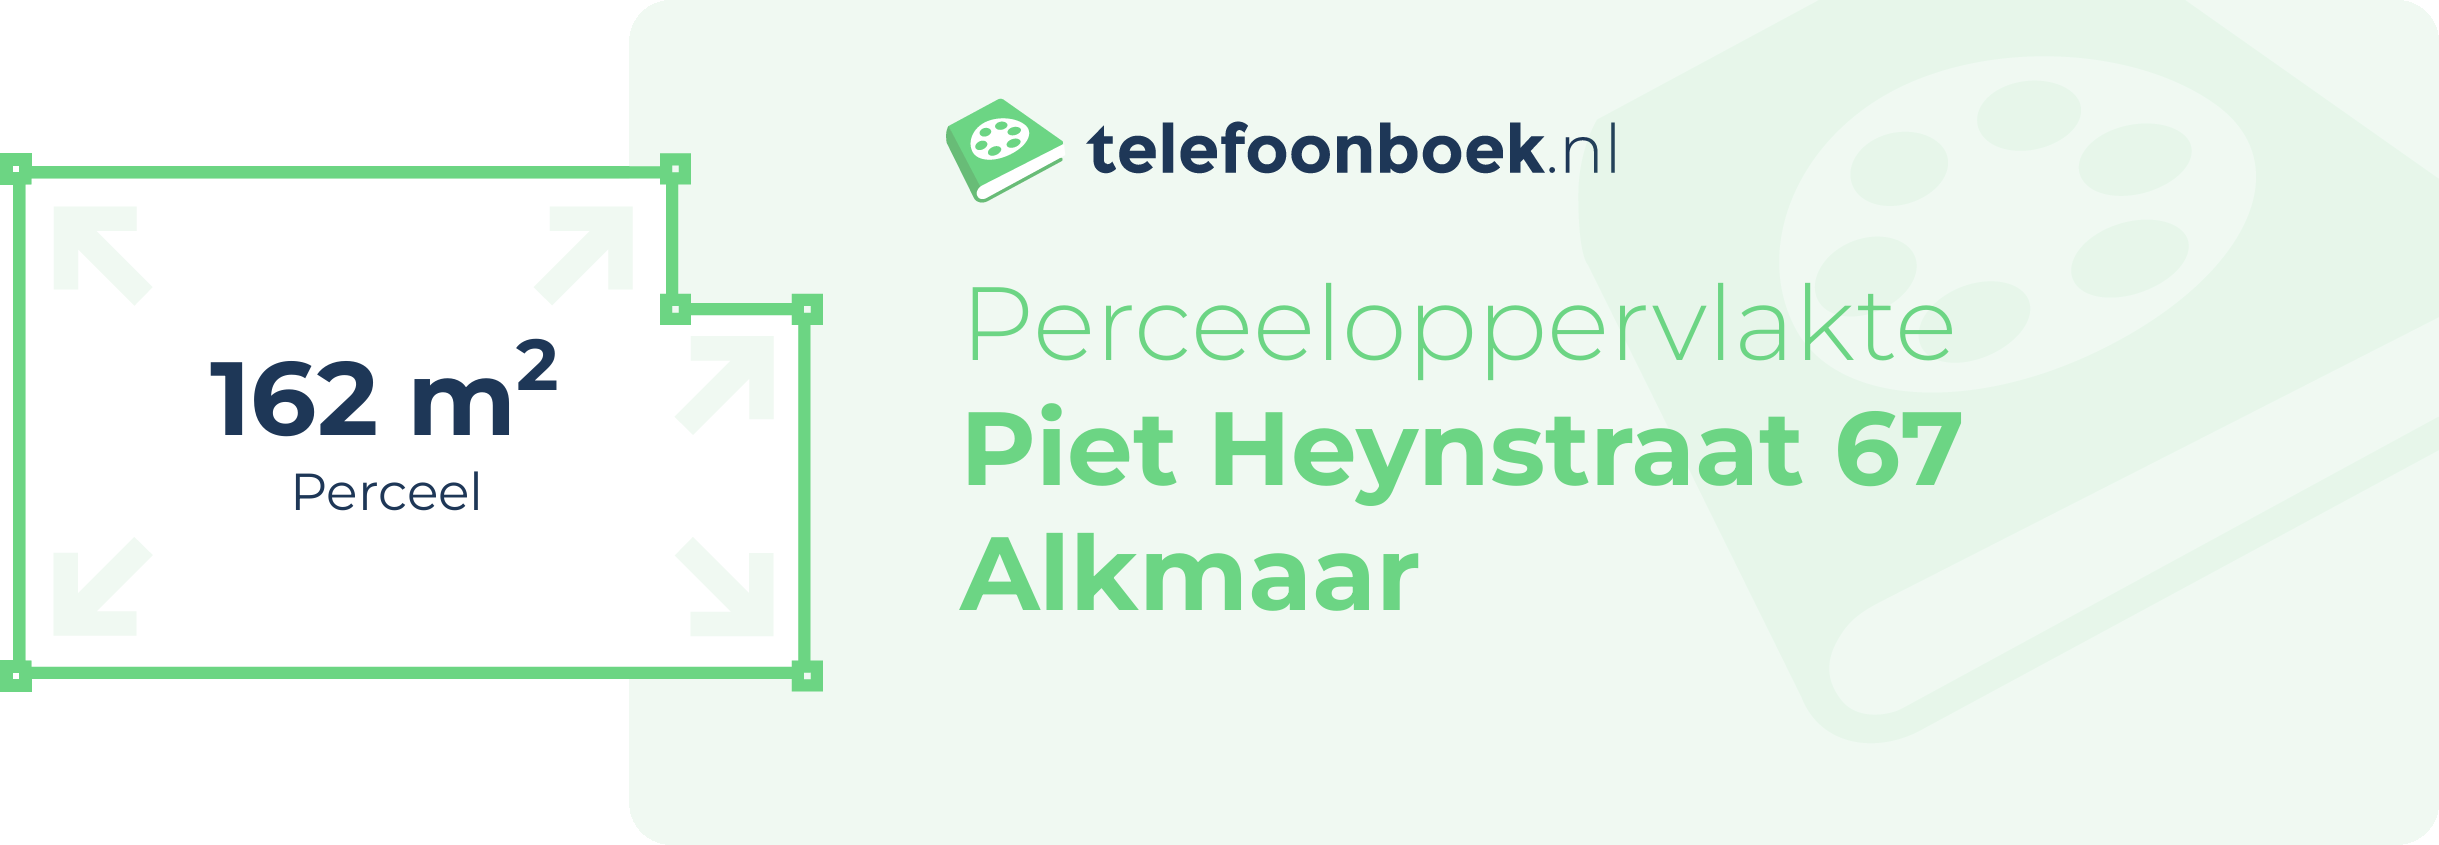 Perceeloppervlakte Piet Heynstraat 67 Alkmaar